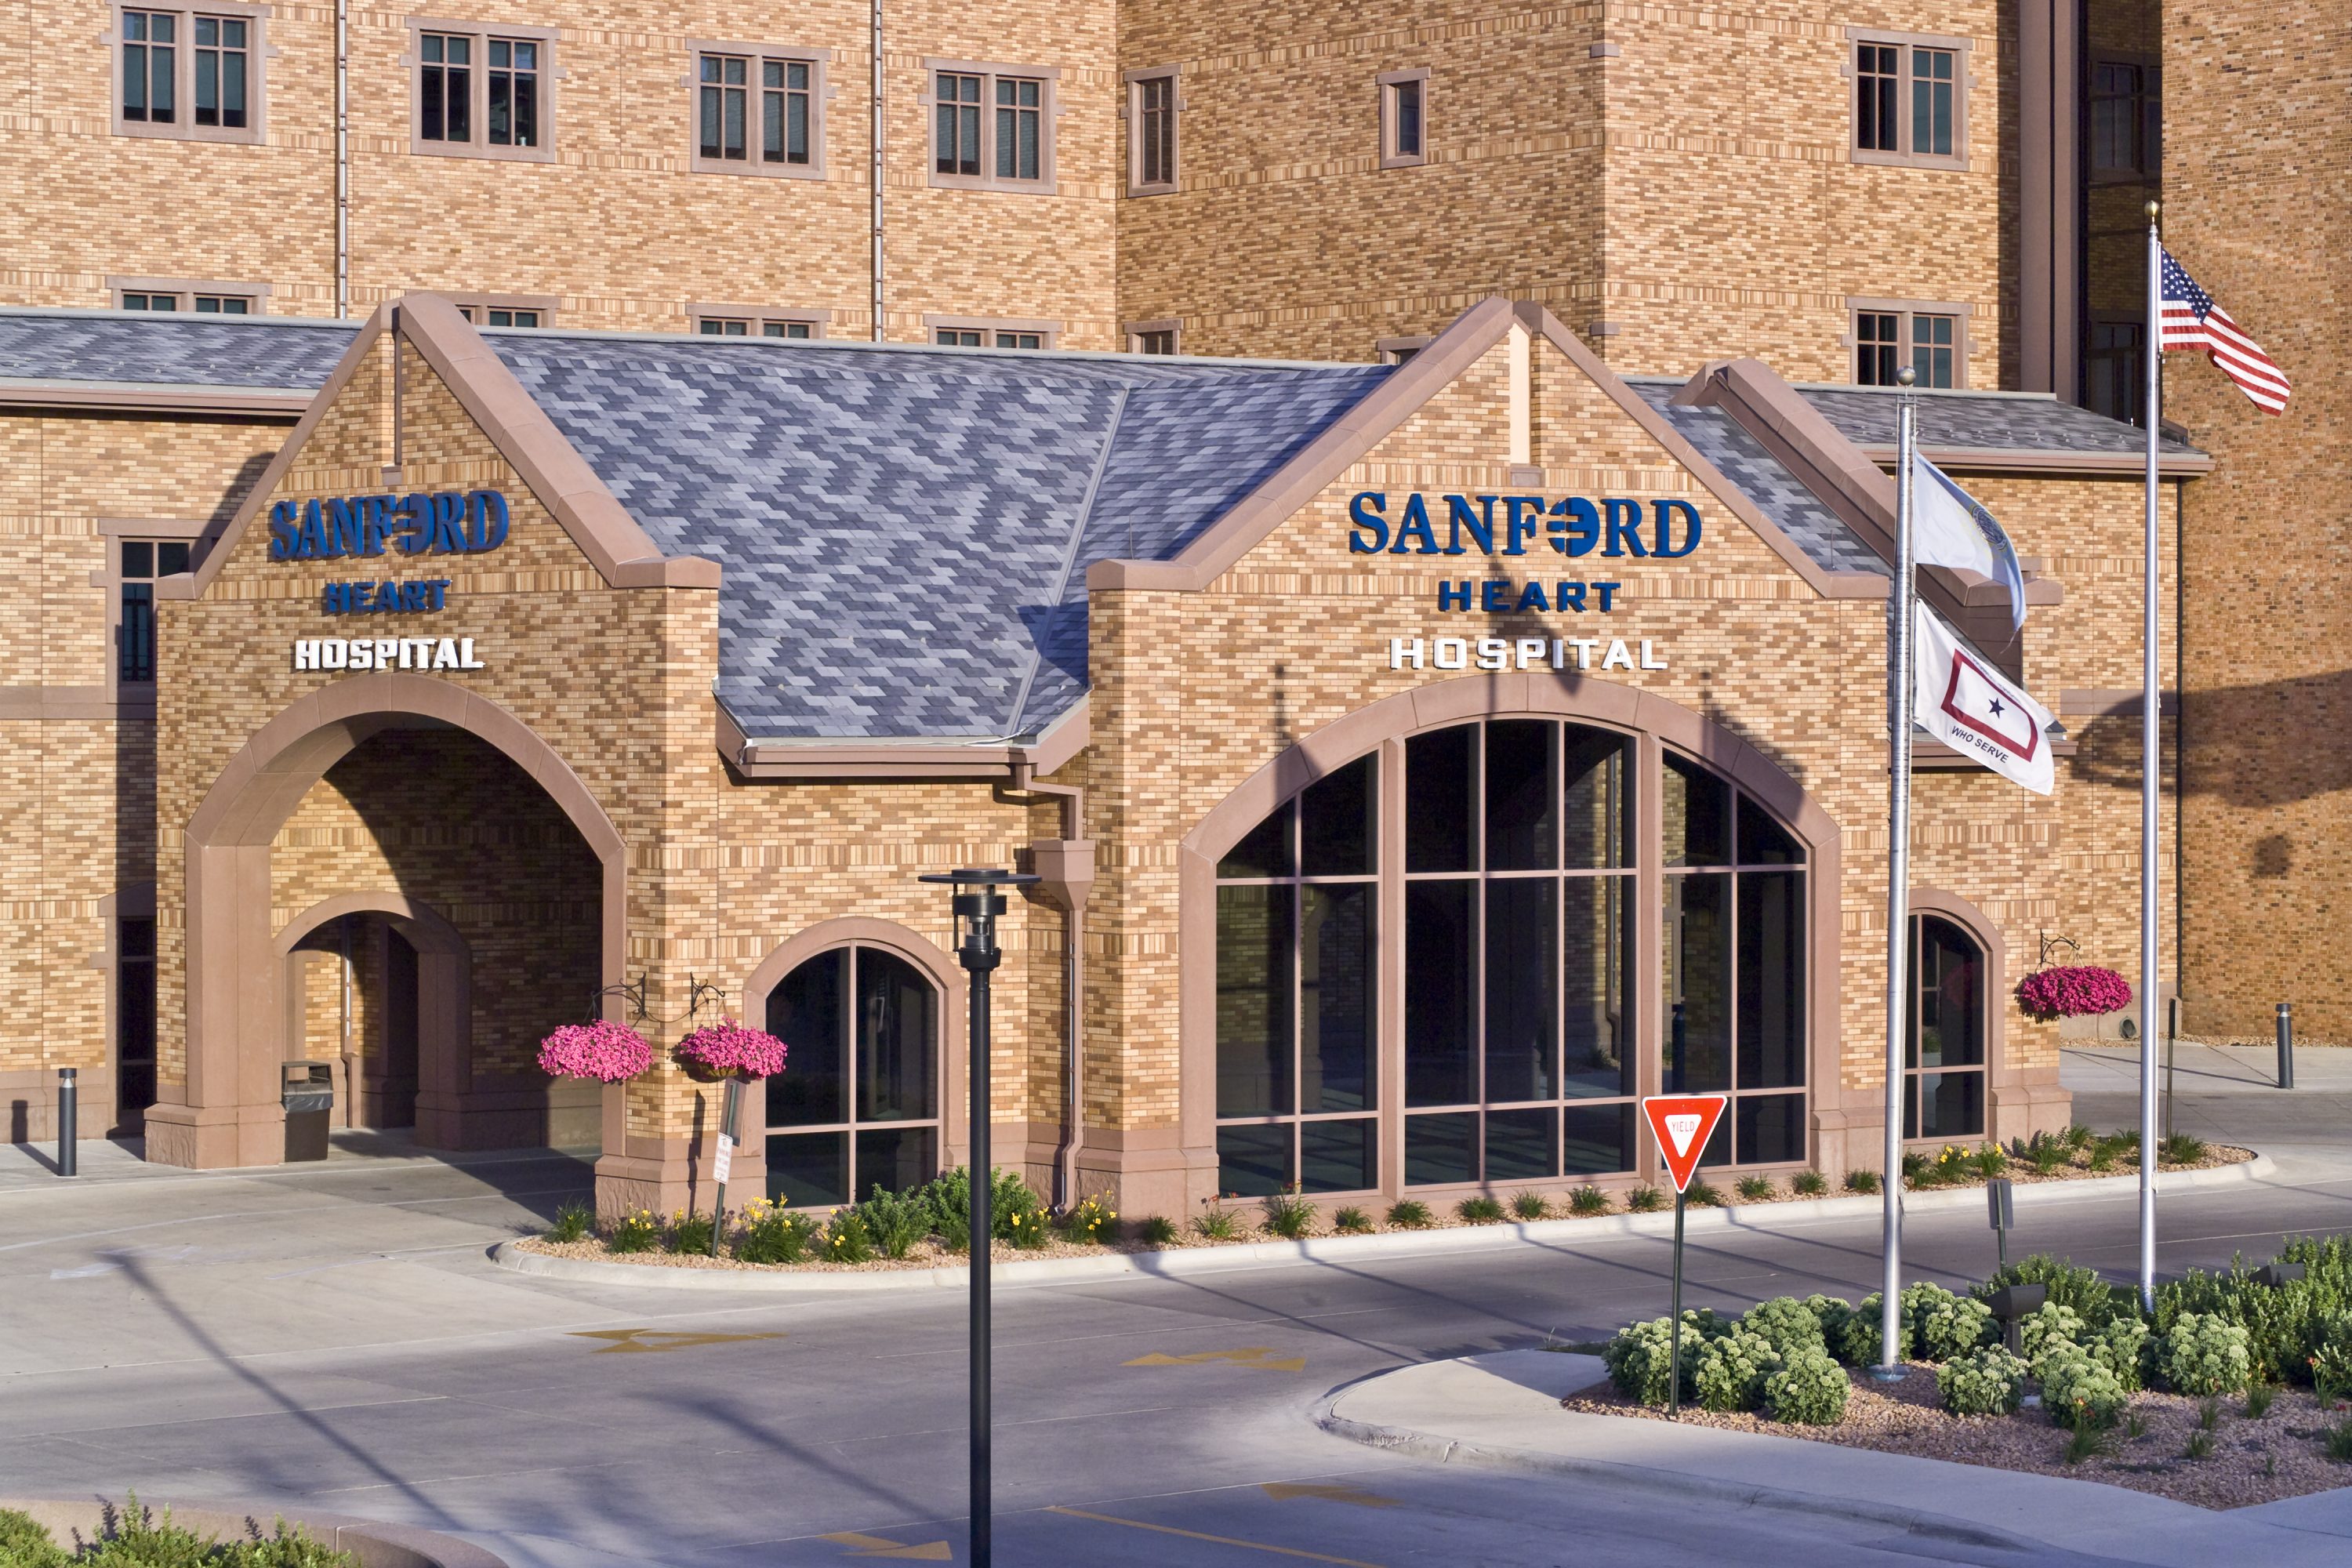 Sanford Heart Hospital